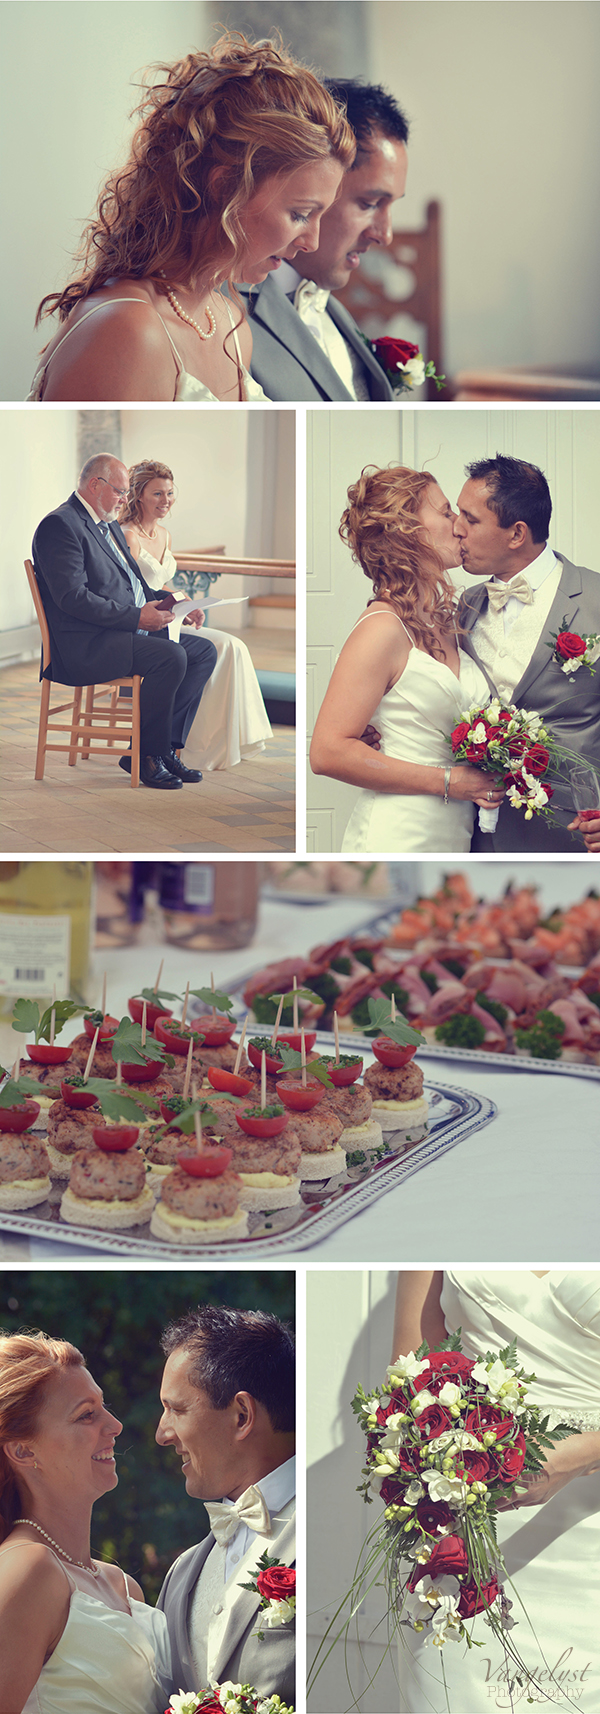 bryllup-collage-fotos-wedding-collage-photos-blog